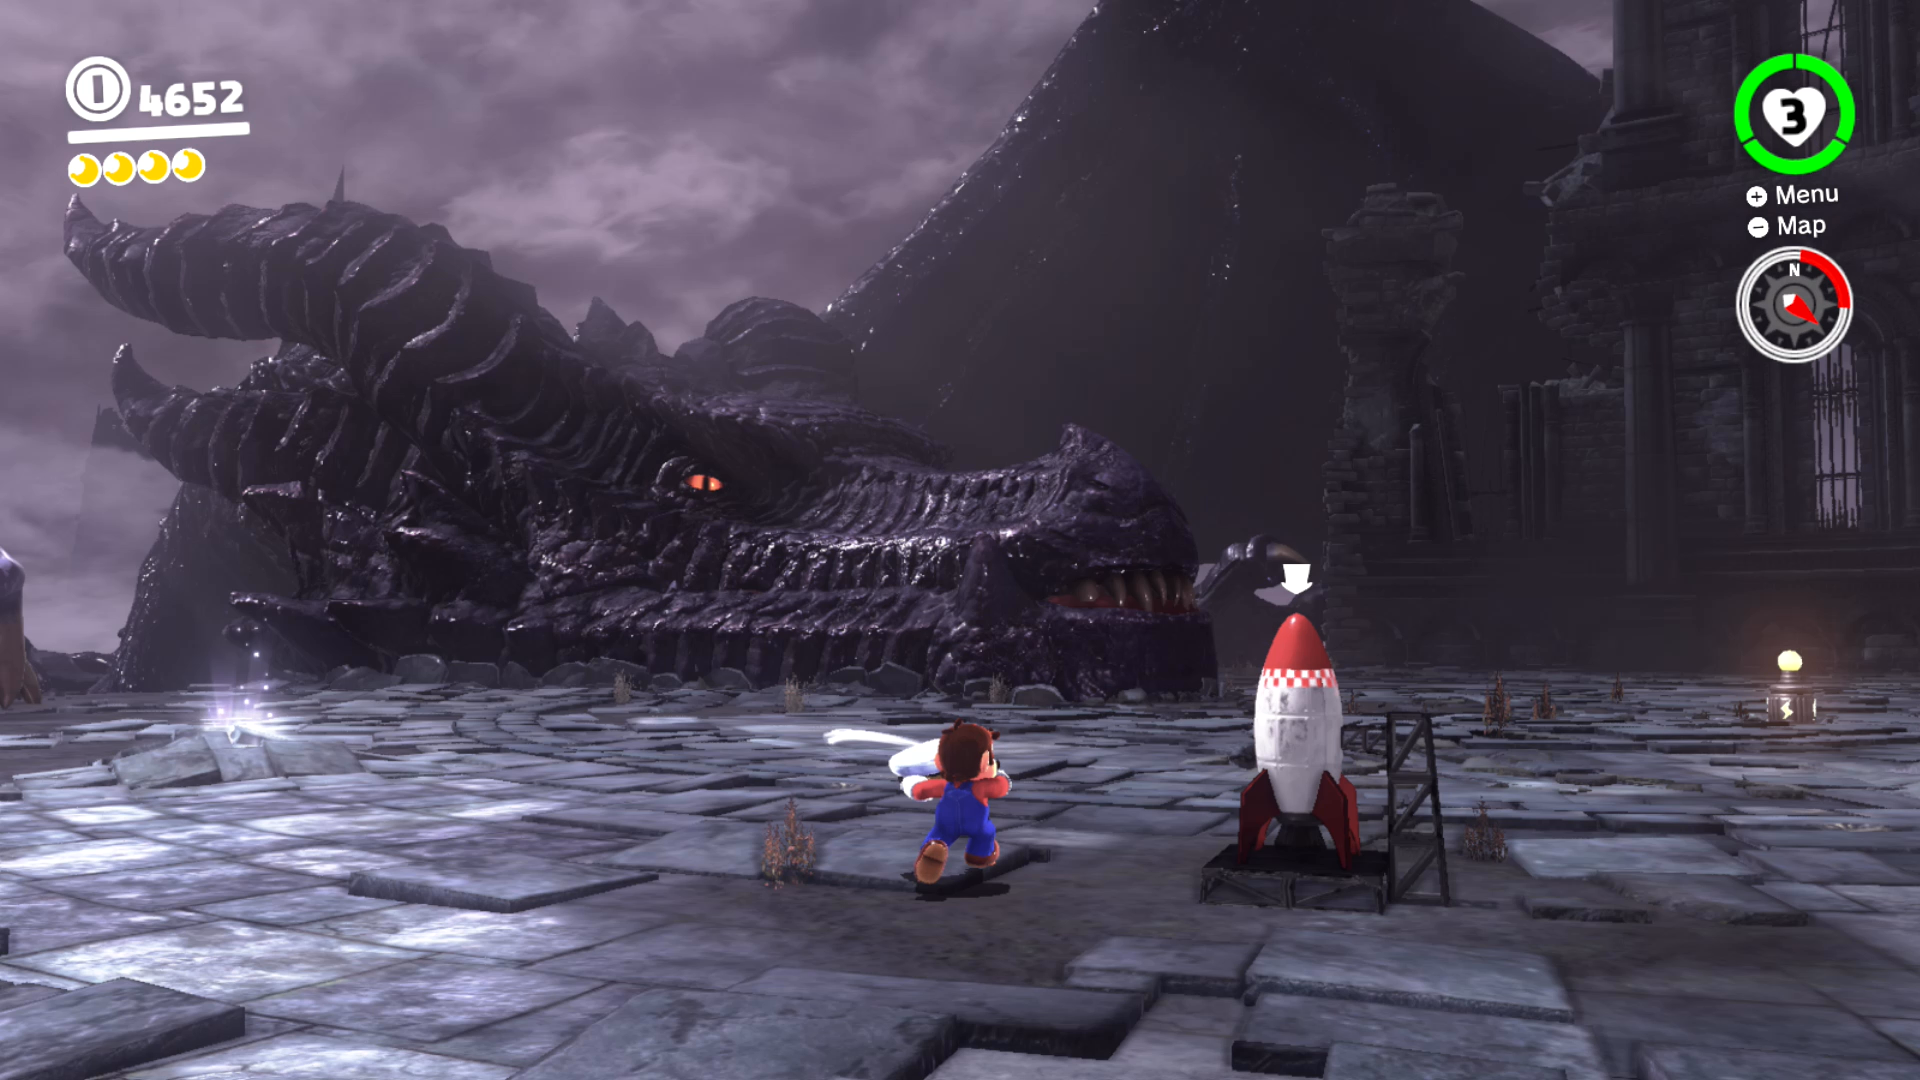 Super Mario Odyssey - Ruined Kingdom - Moon Locations